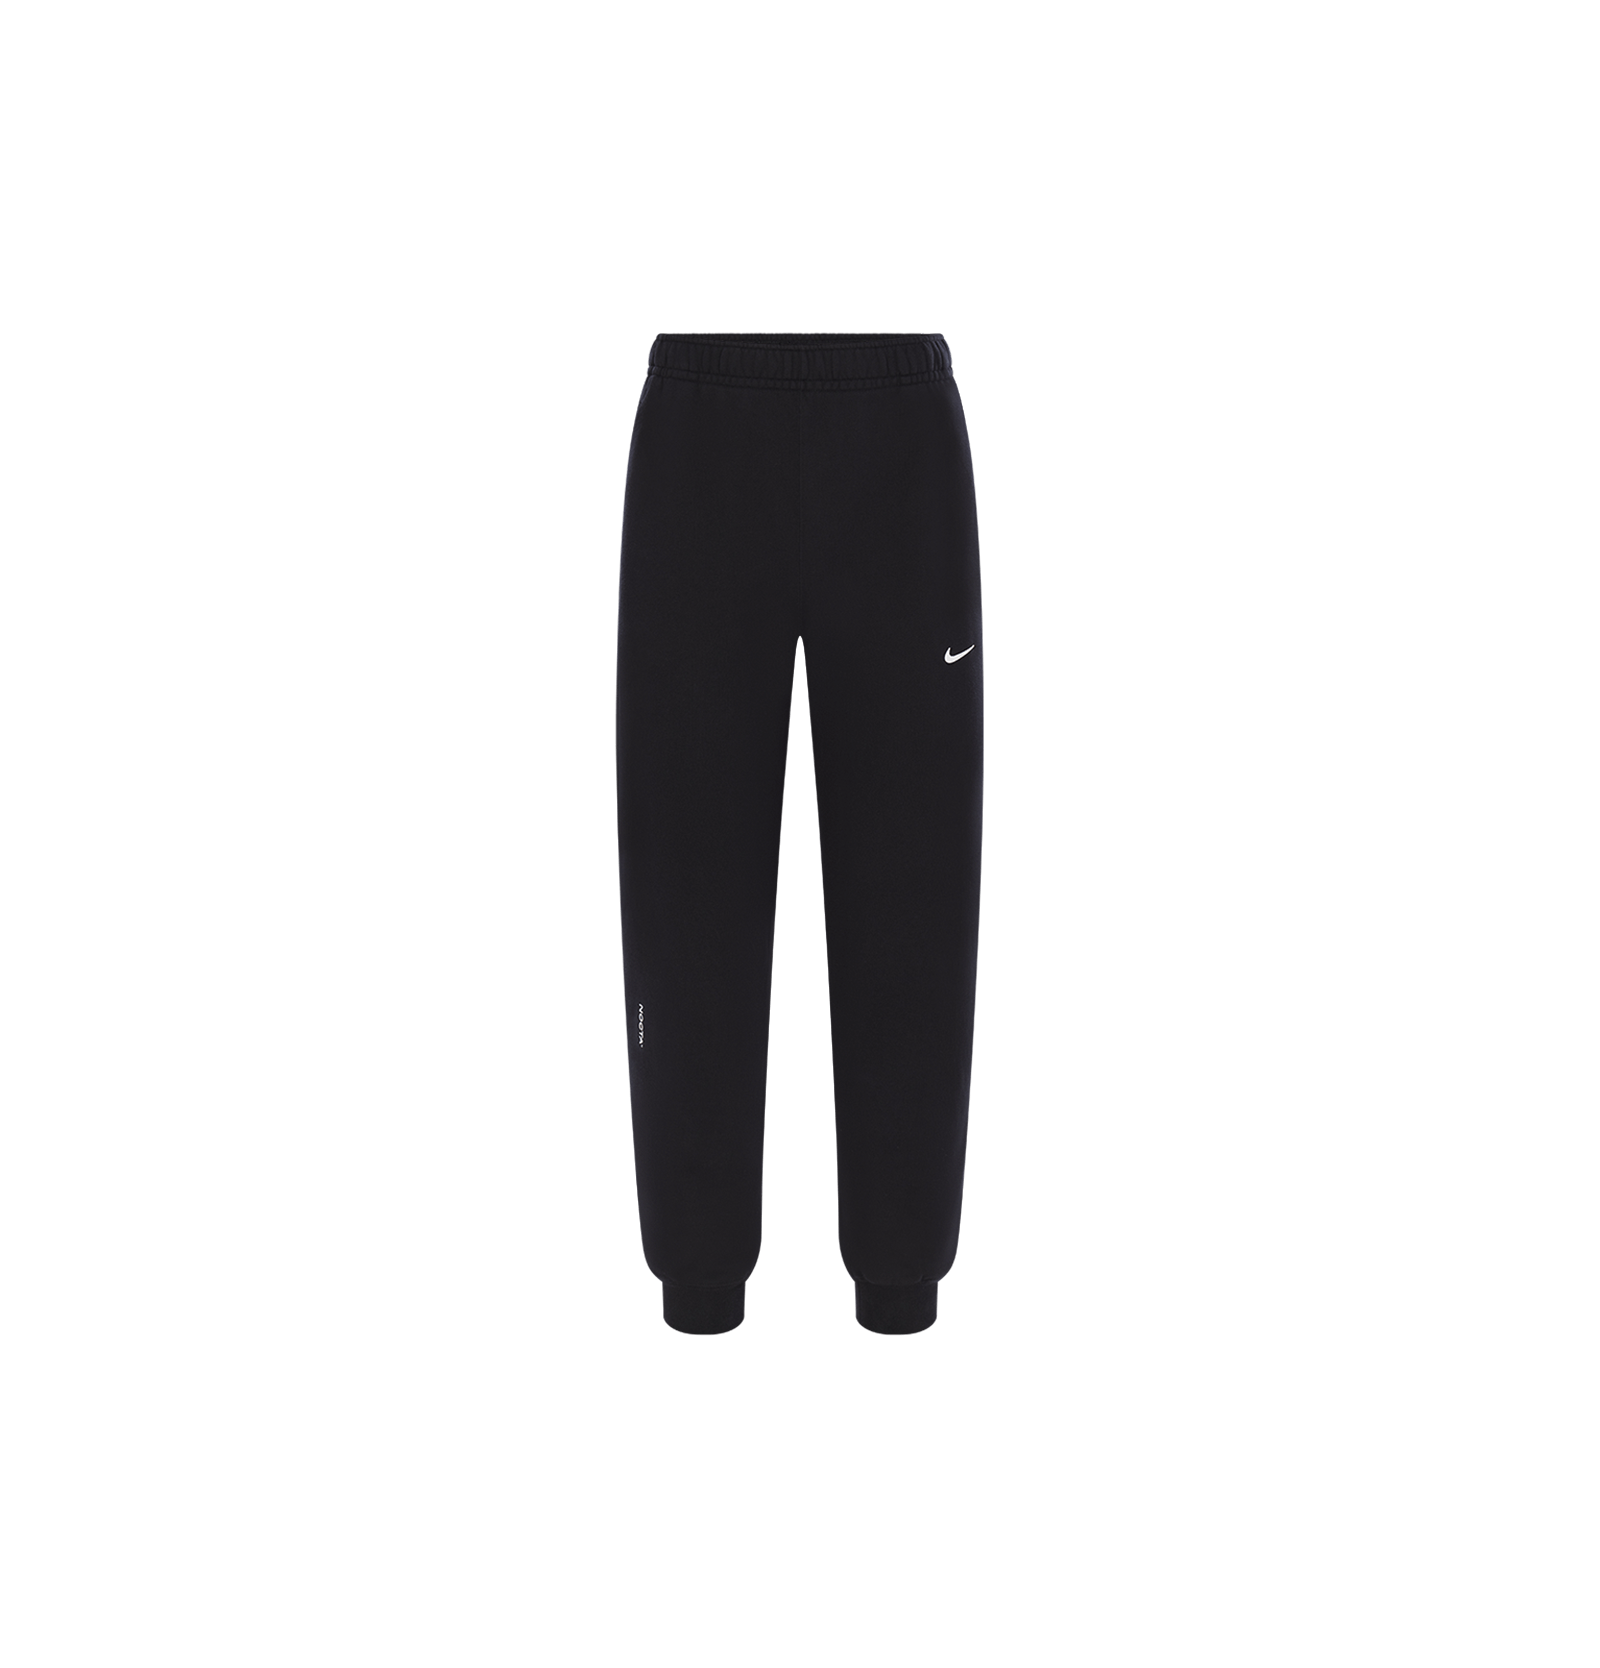 Nocta Sweatpants Medium (looking to trade for Large black fleece pants or  track pants) : r/NOCTADRAKE